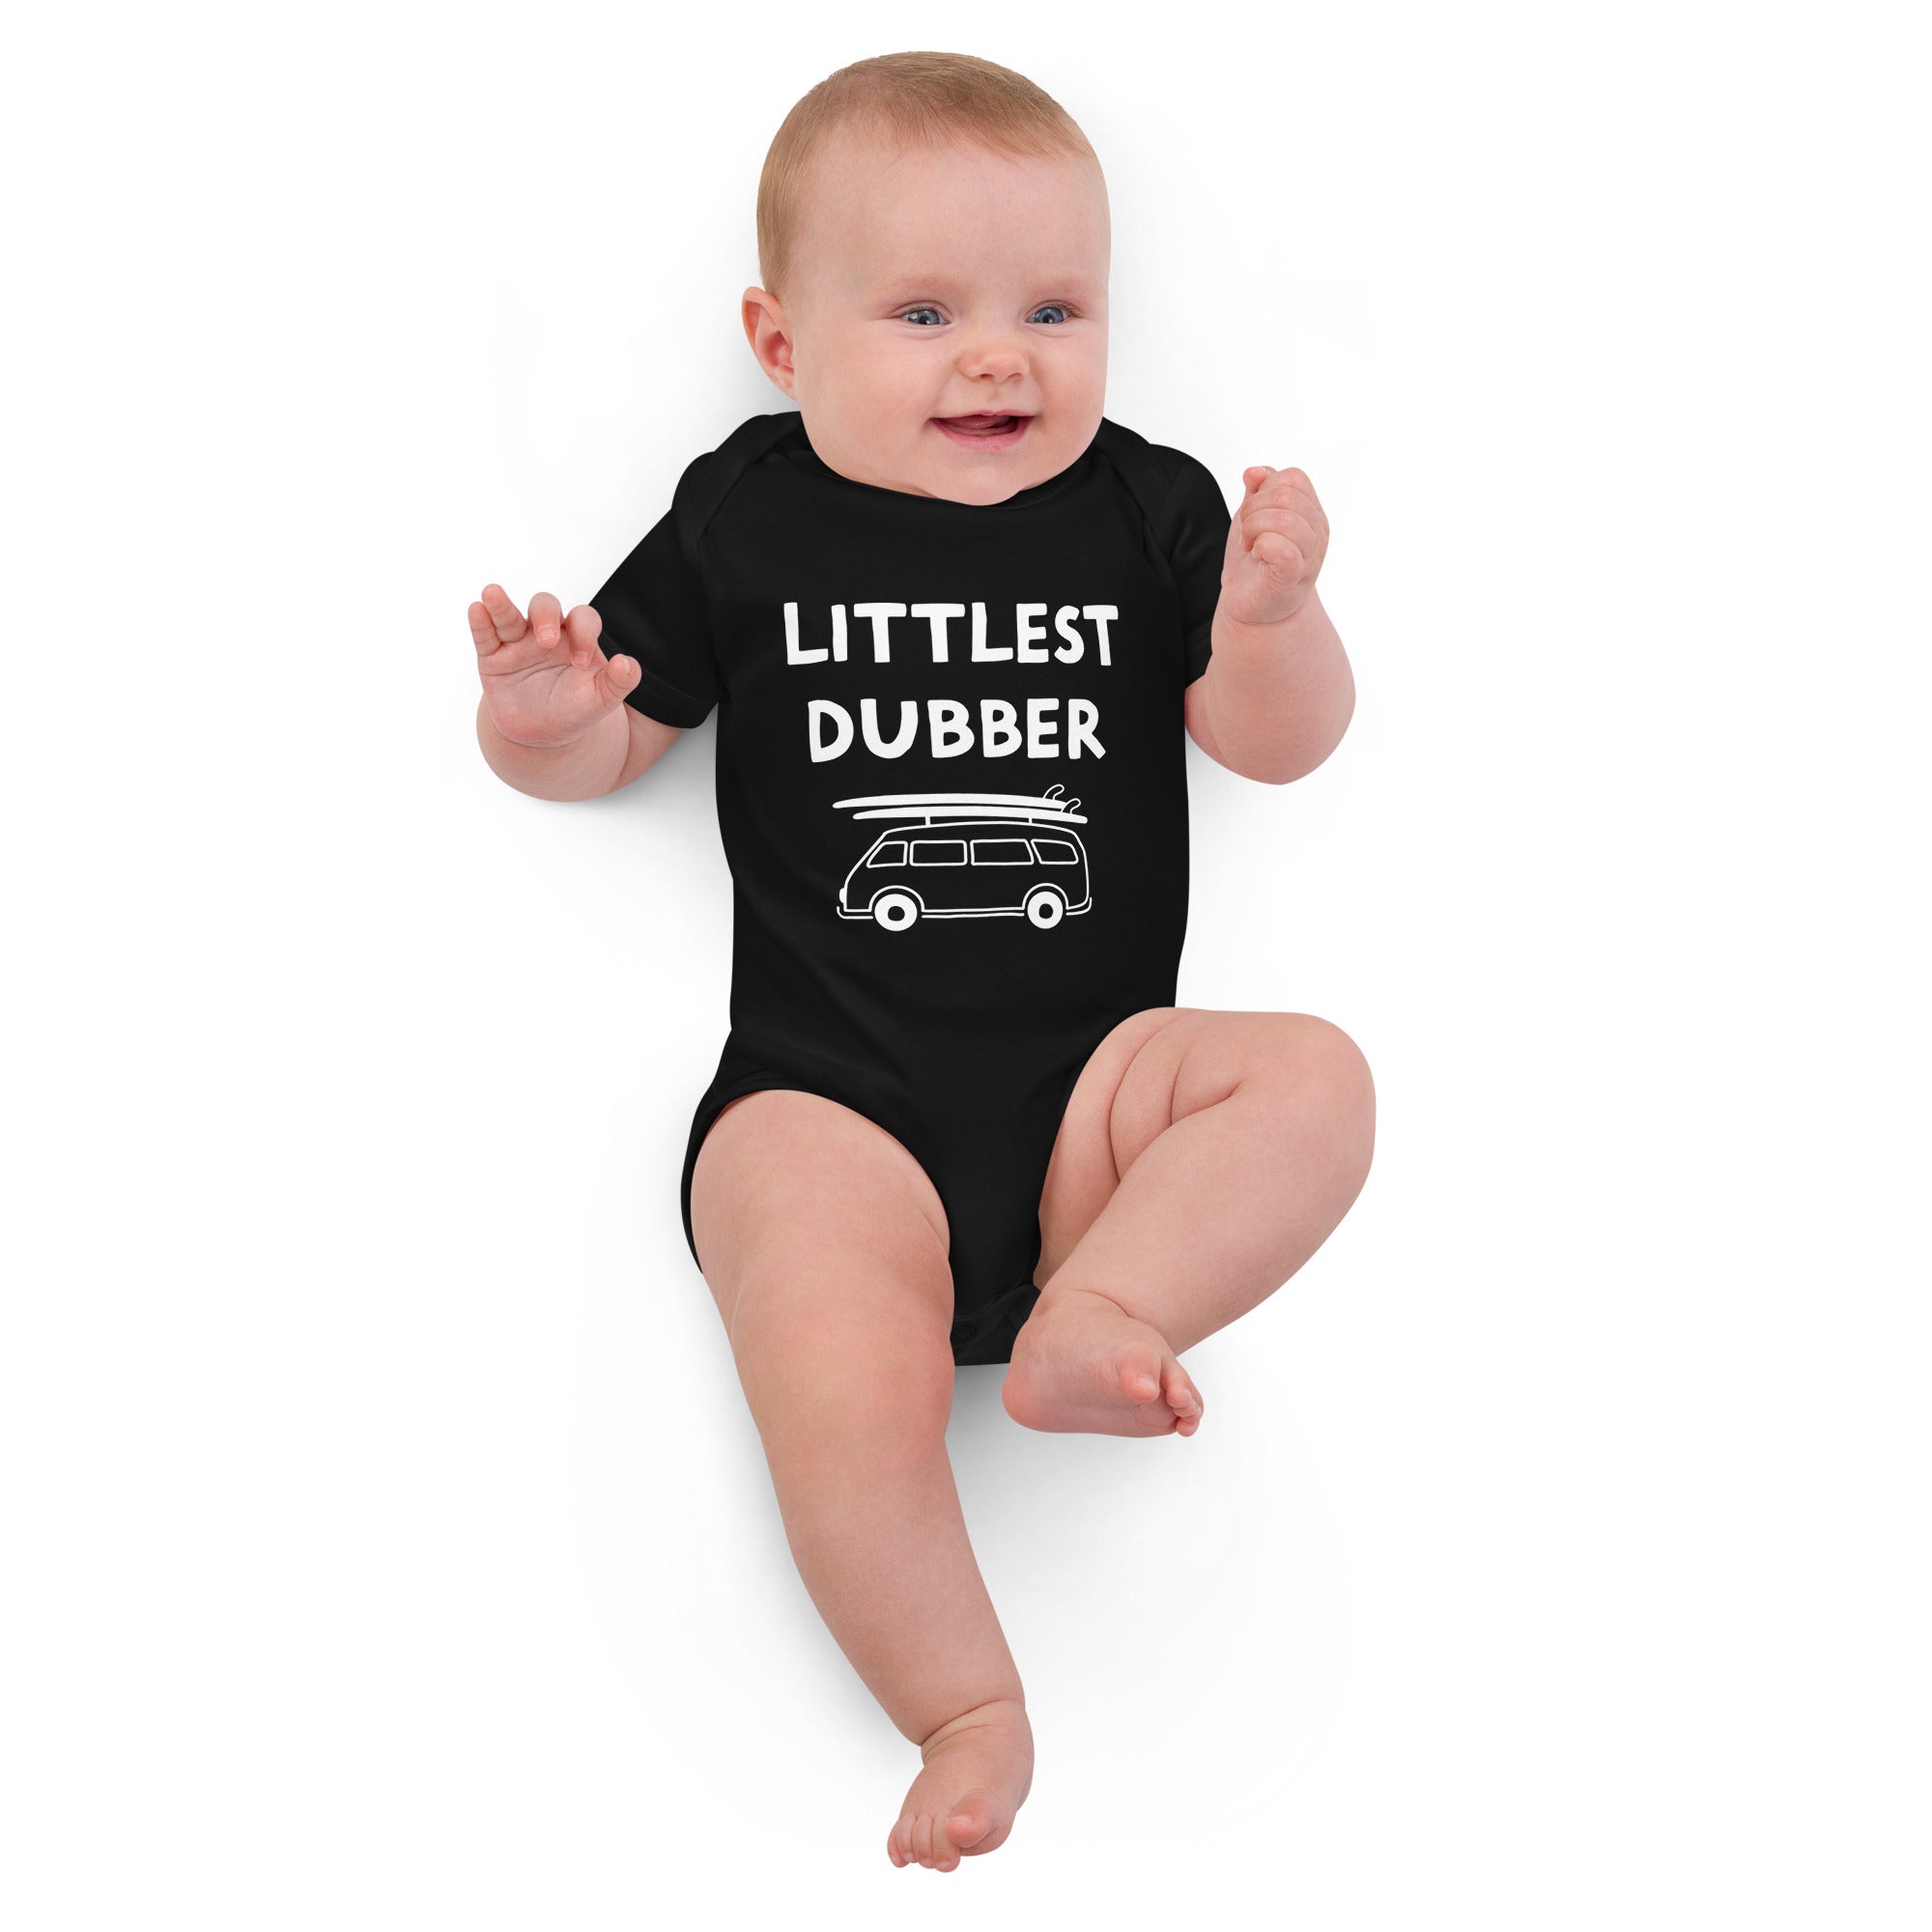 ‘Littlest DUBBER’ baby bodysuit